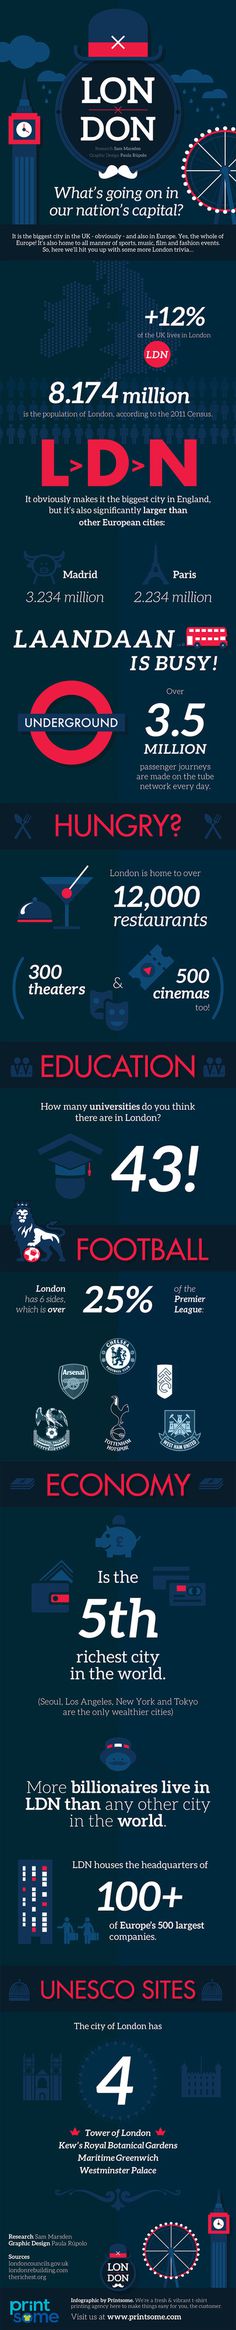 London Infographic #london #infographic